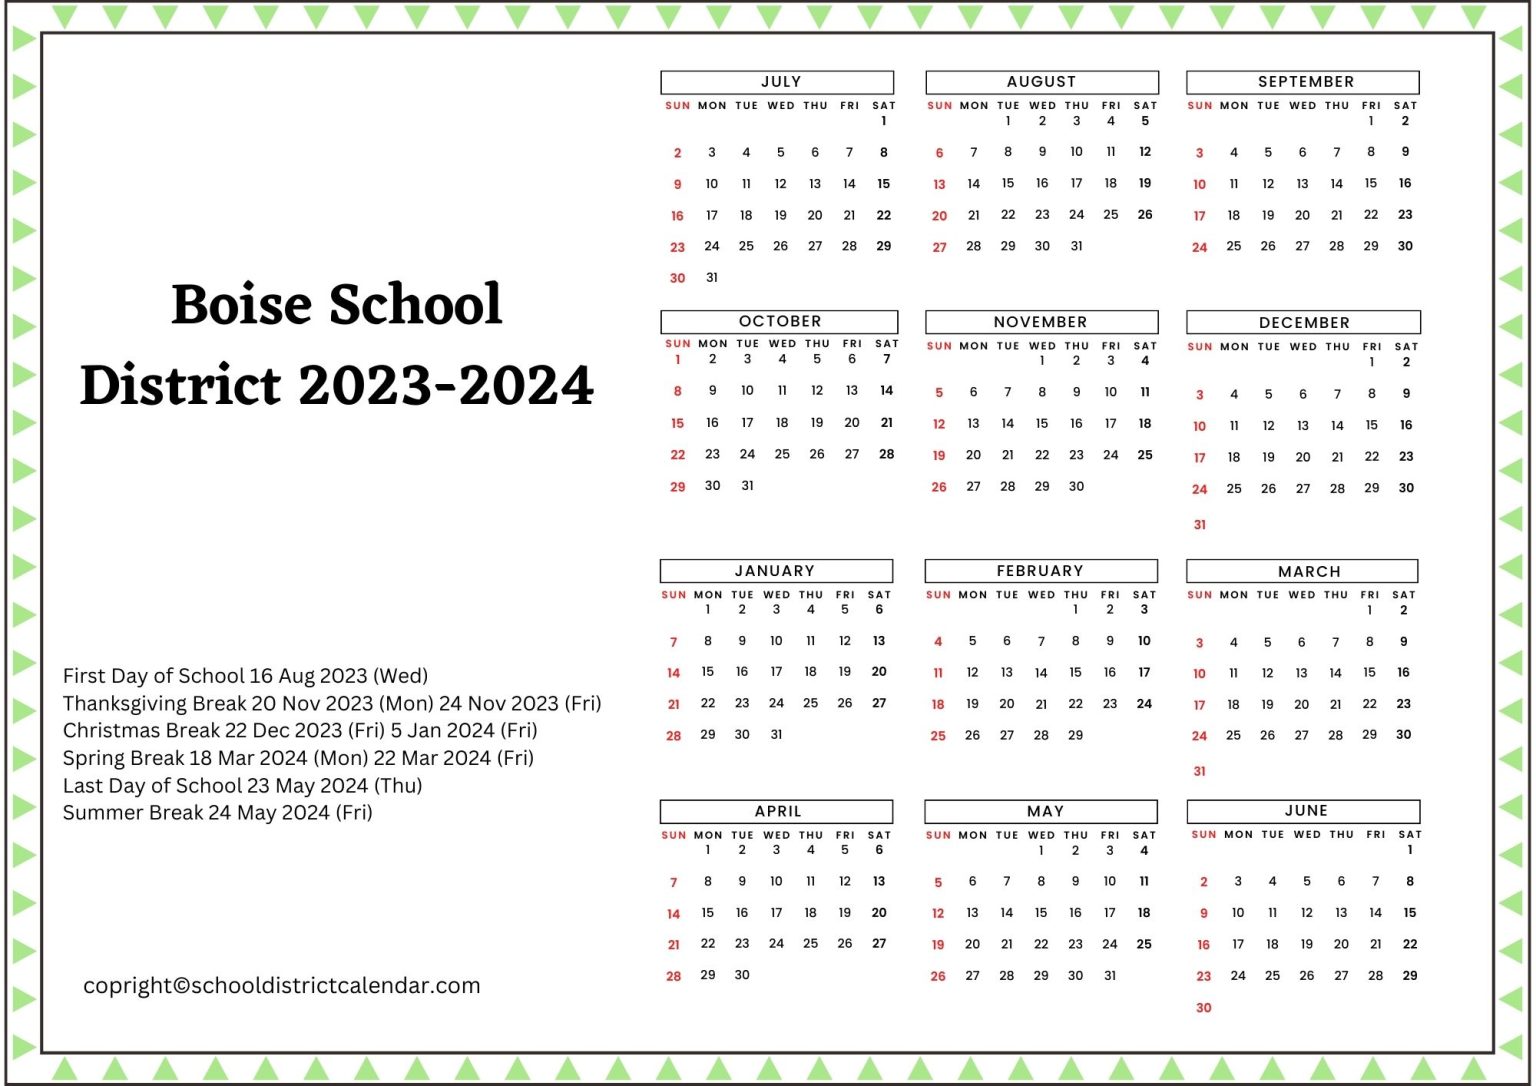 Boise School District Calendar Holidays 2023 2024